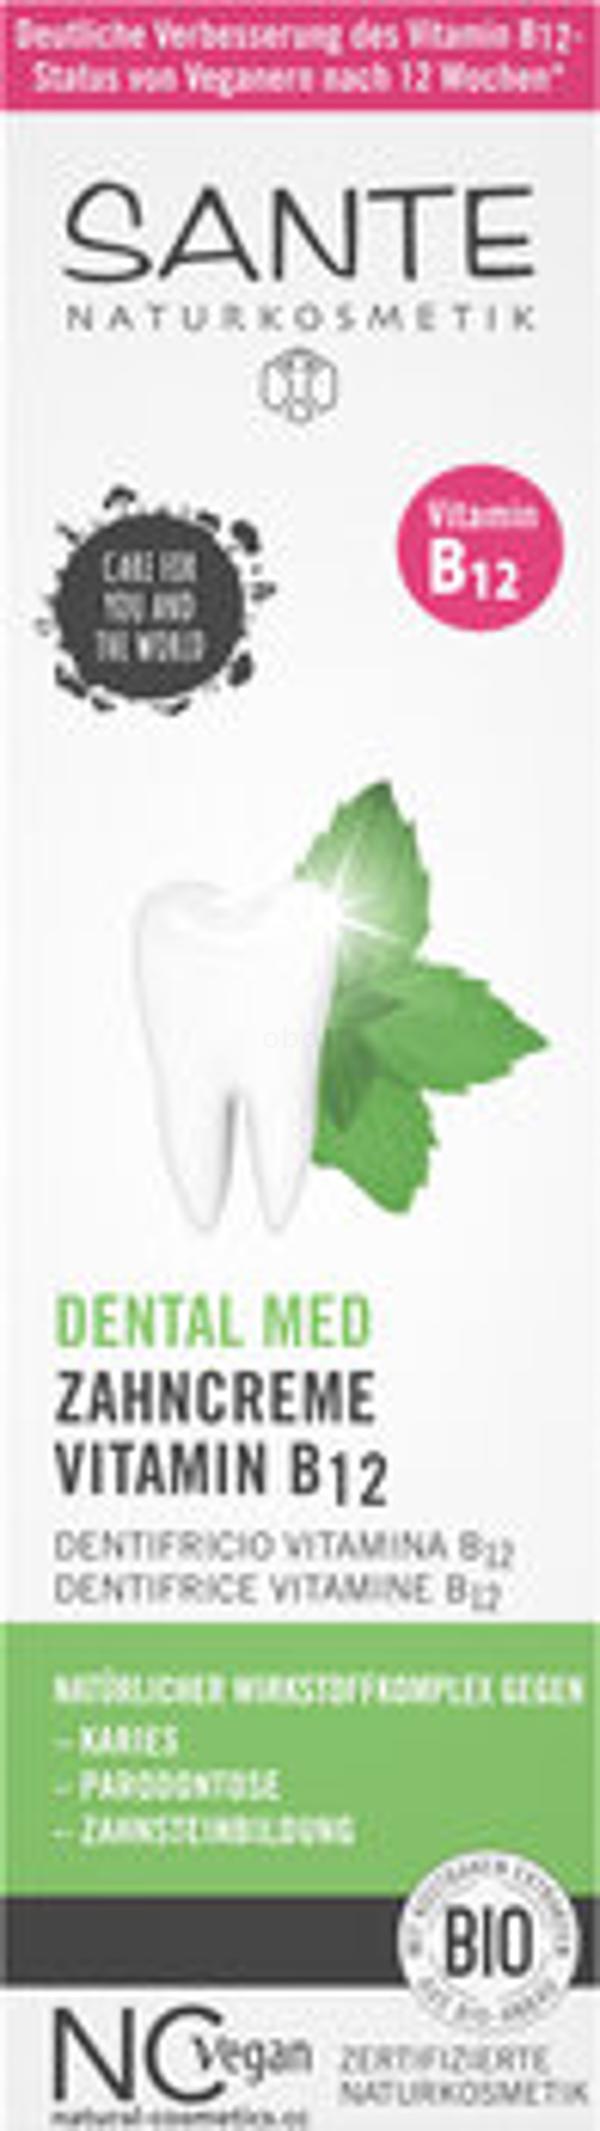 Produktfoto zu DENTAL MED Zahncreme Vitamin B 12